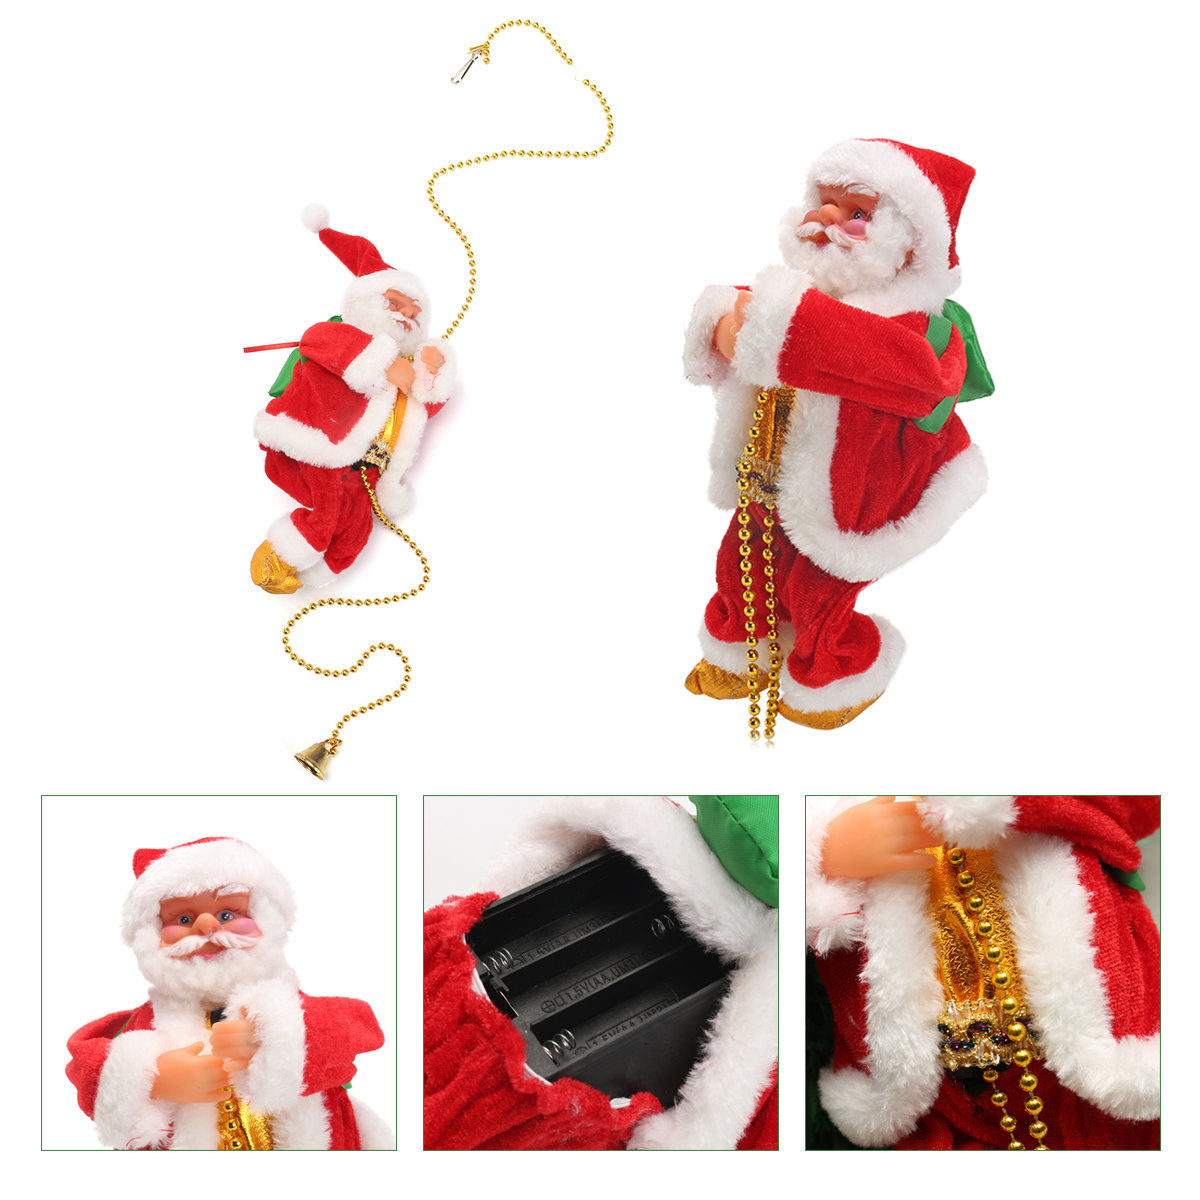 Christmas-Senta-Claus-Climbing-Ladder-Hanging-Decorations-Holiday-Gift-1333945-2